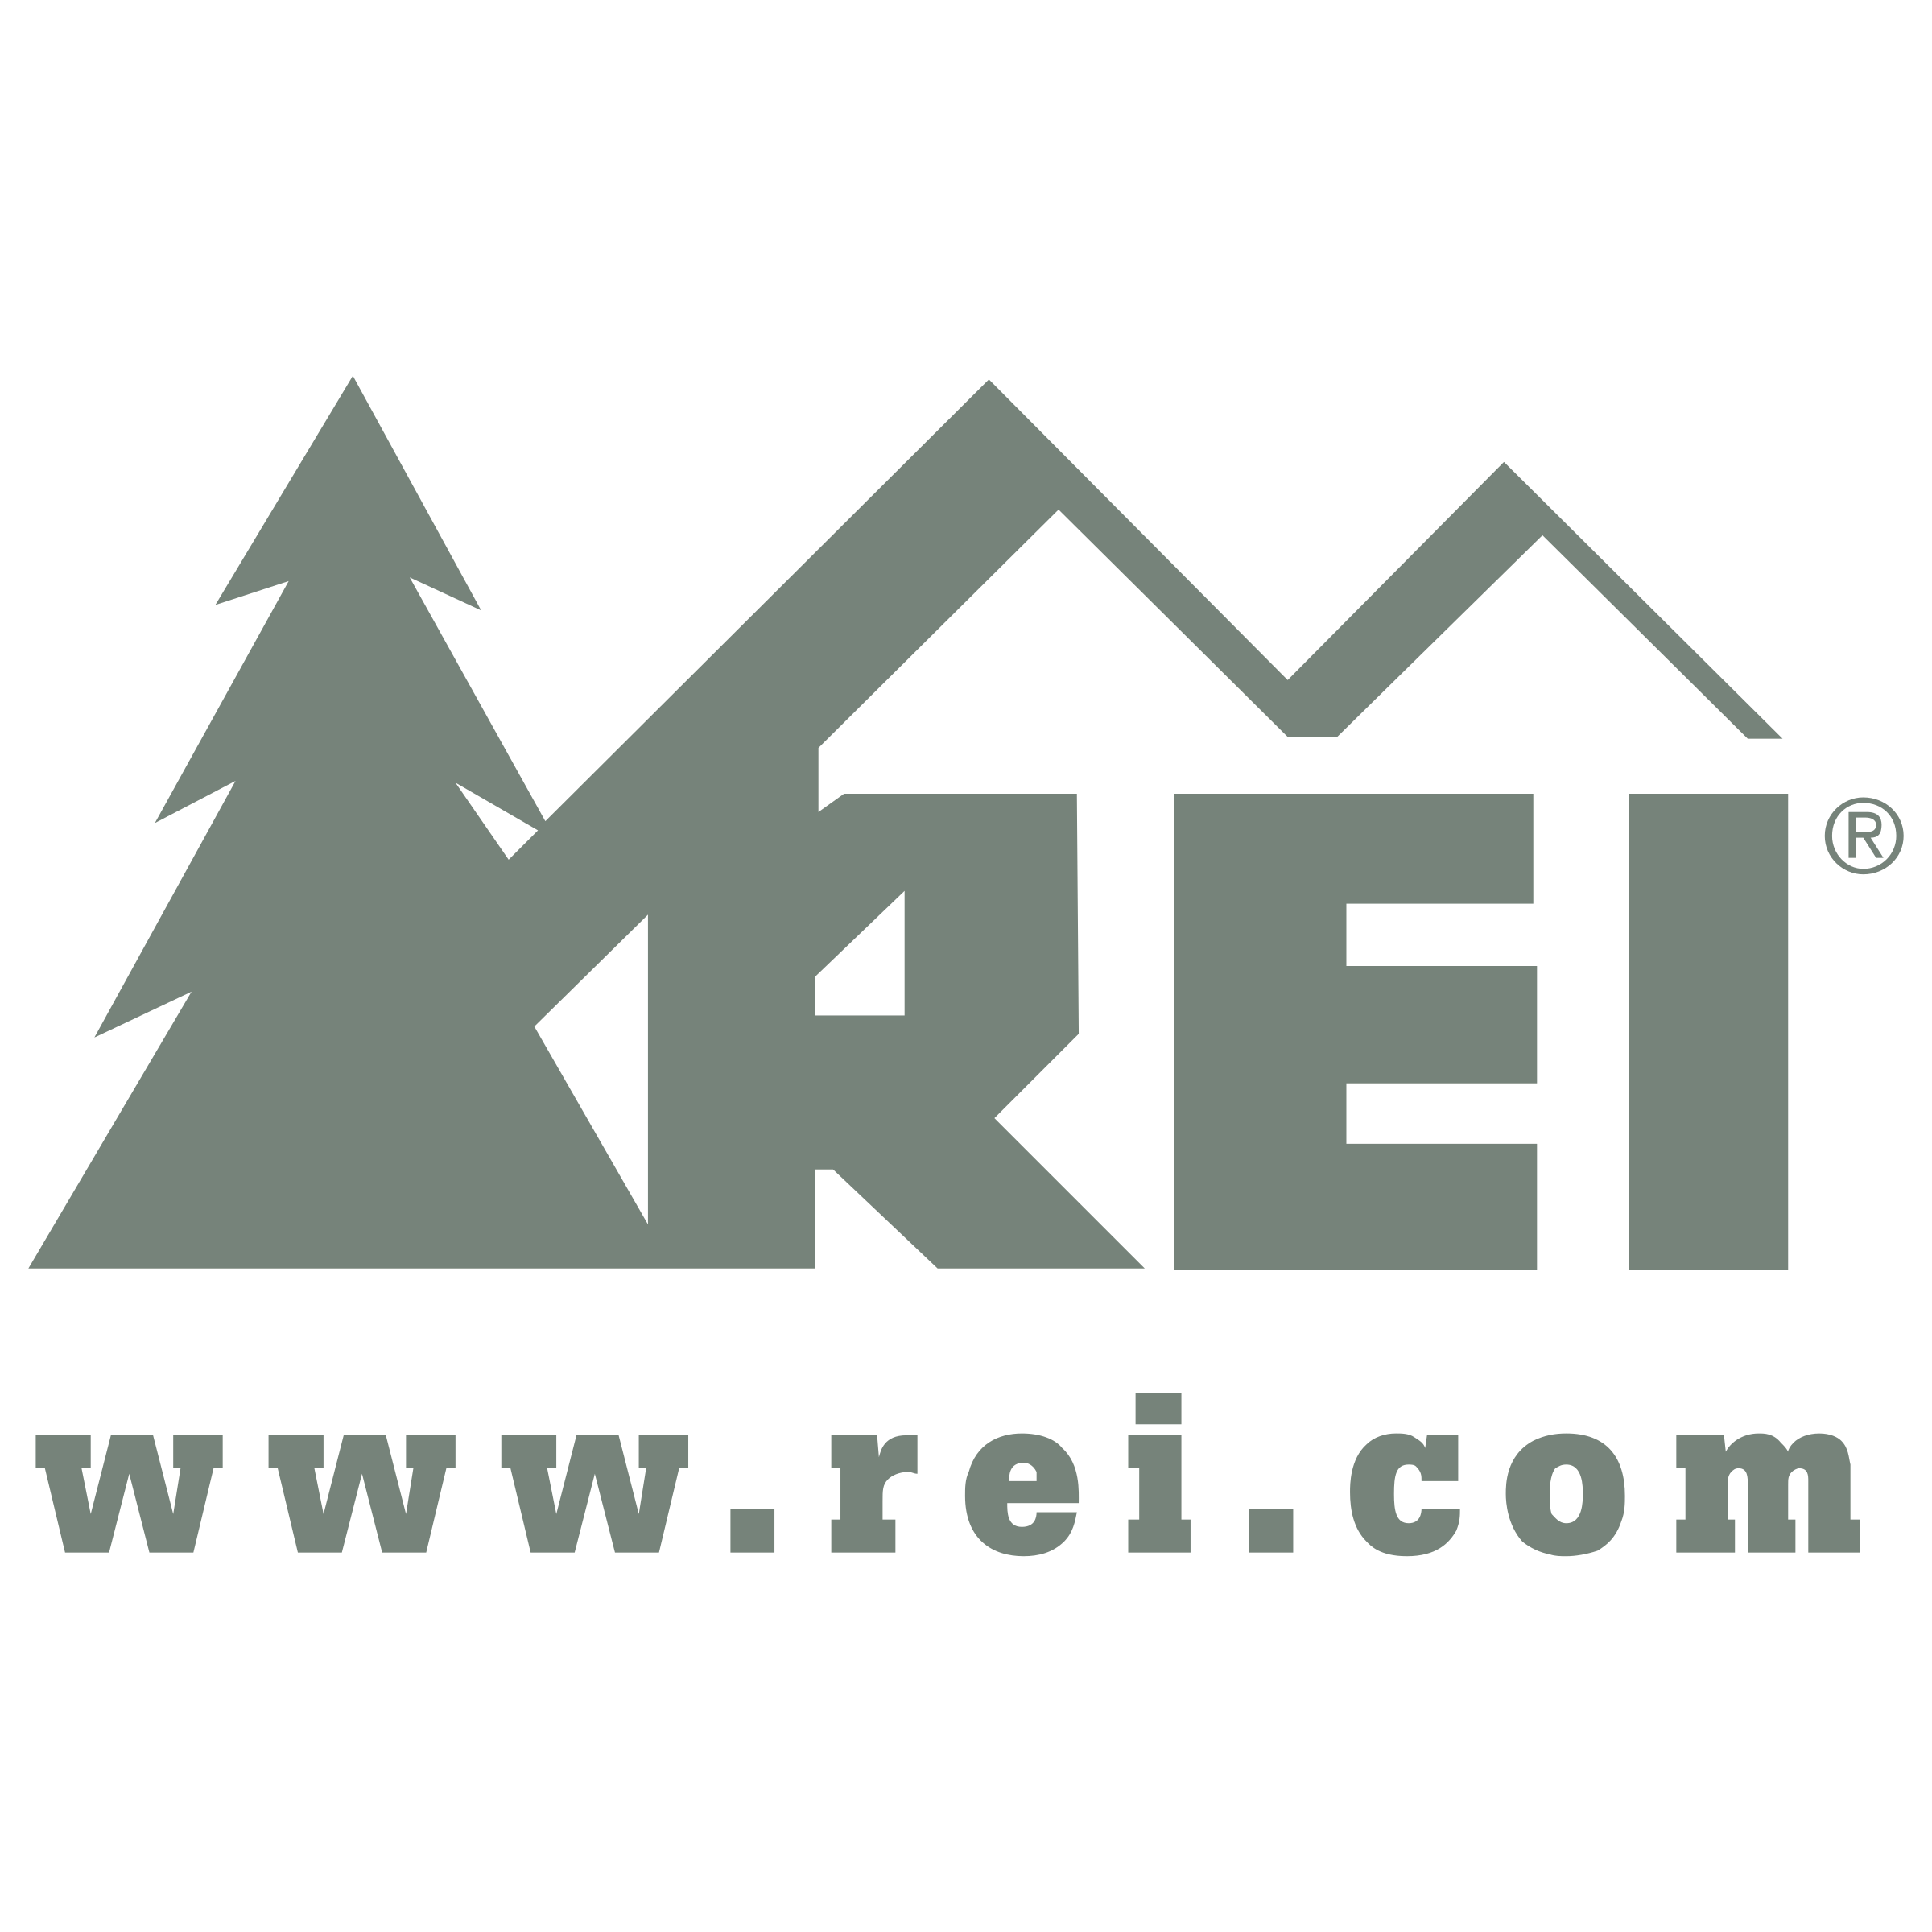 REI Logo - REI Logo PNG Transparent & SVG Vector - Freebie Supply